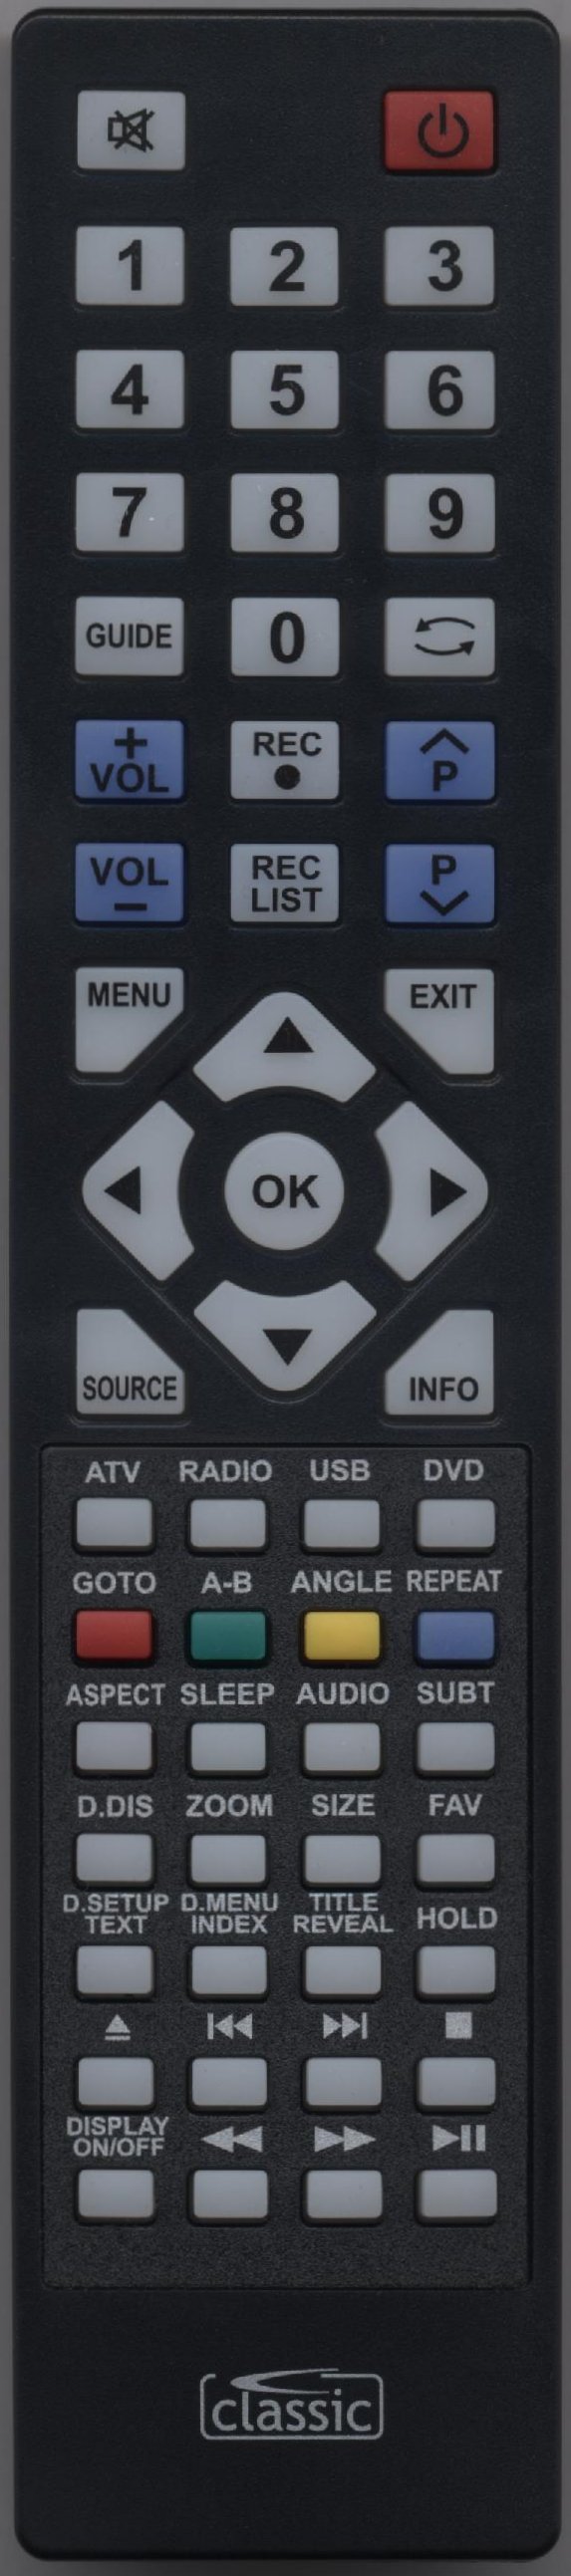 UMC 32/68G-GB-1B-TCDUP-UK Remote Control Alternative 